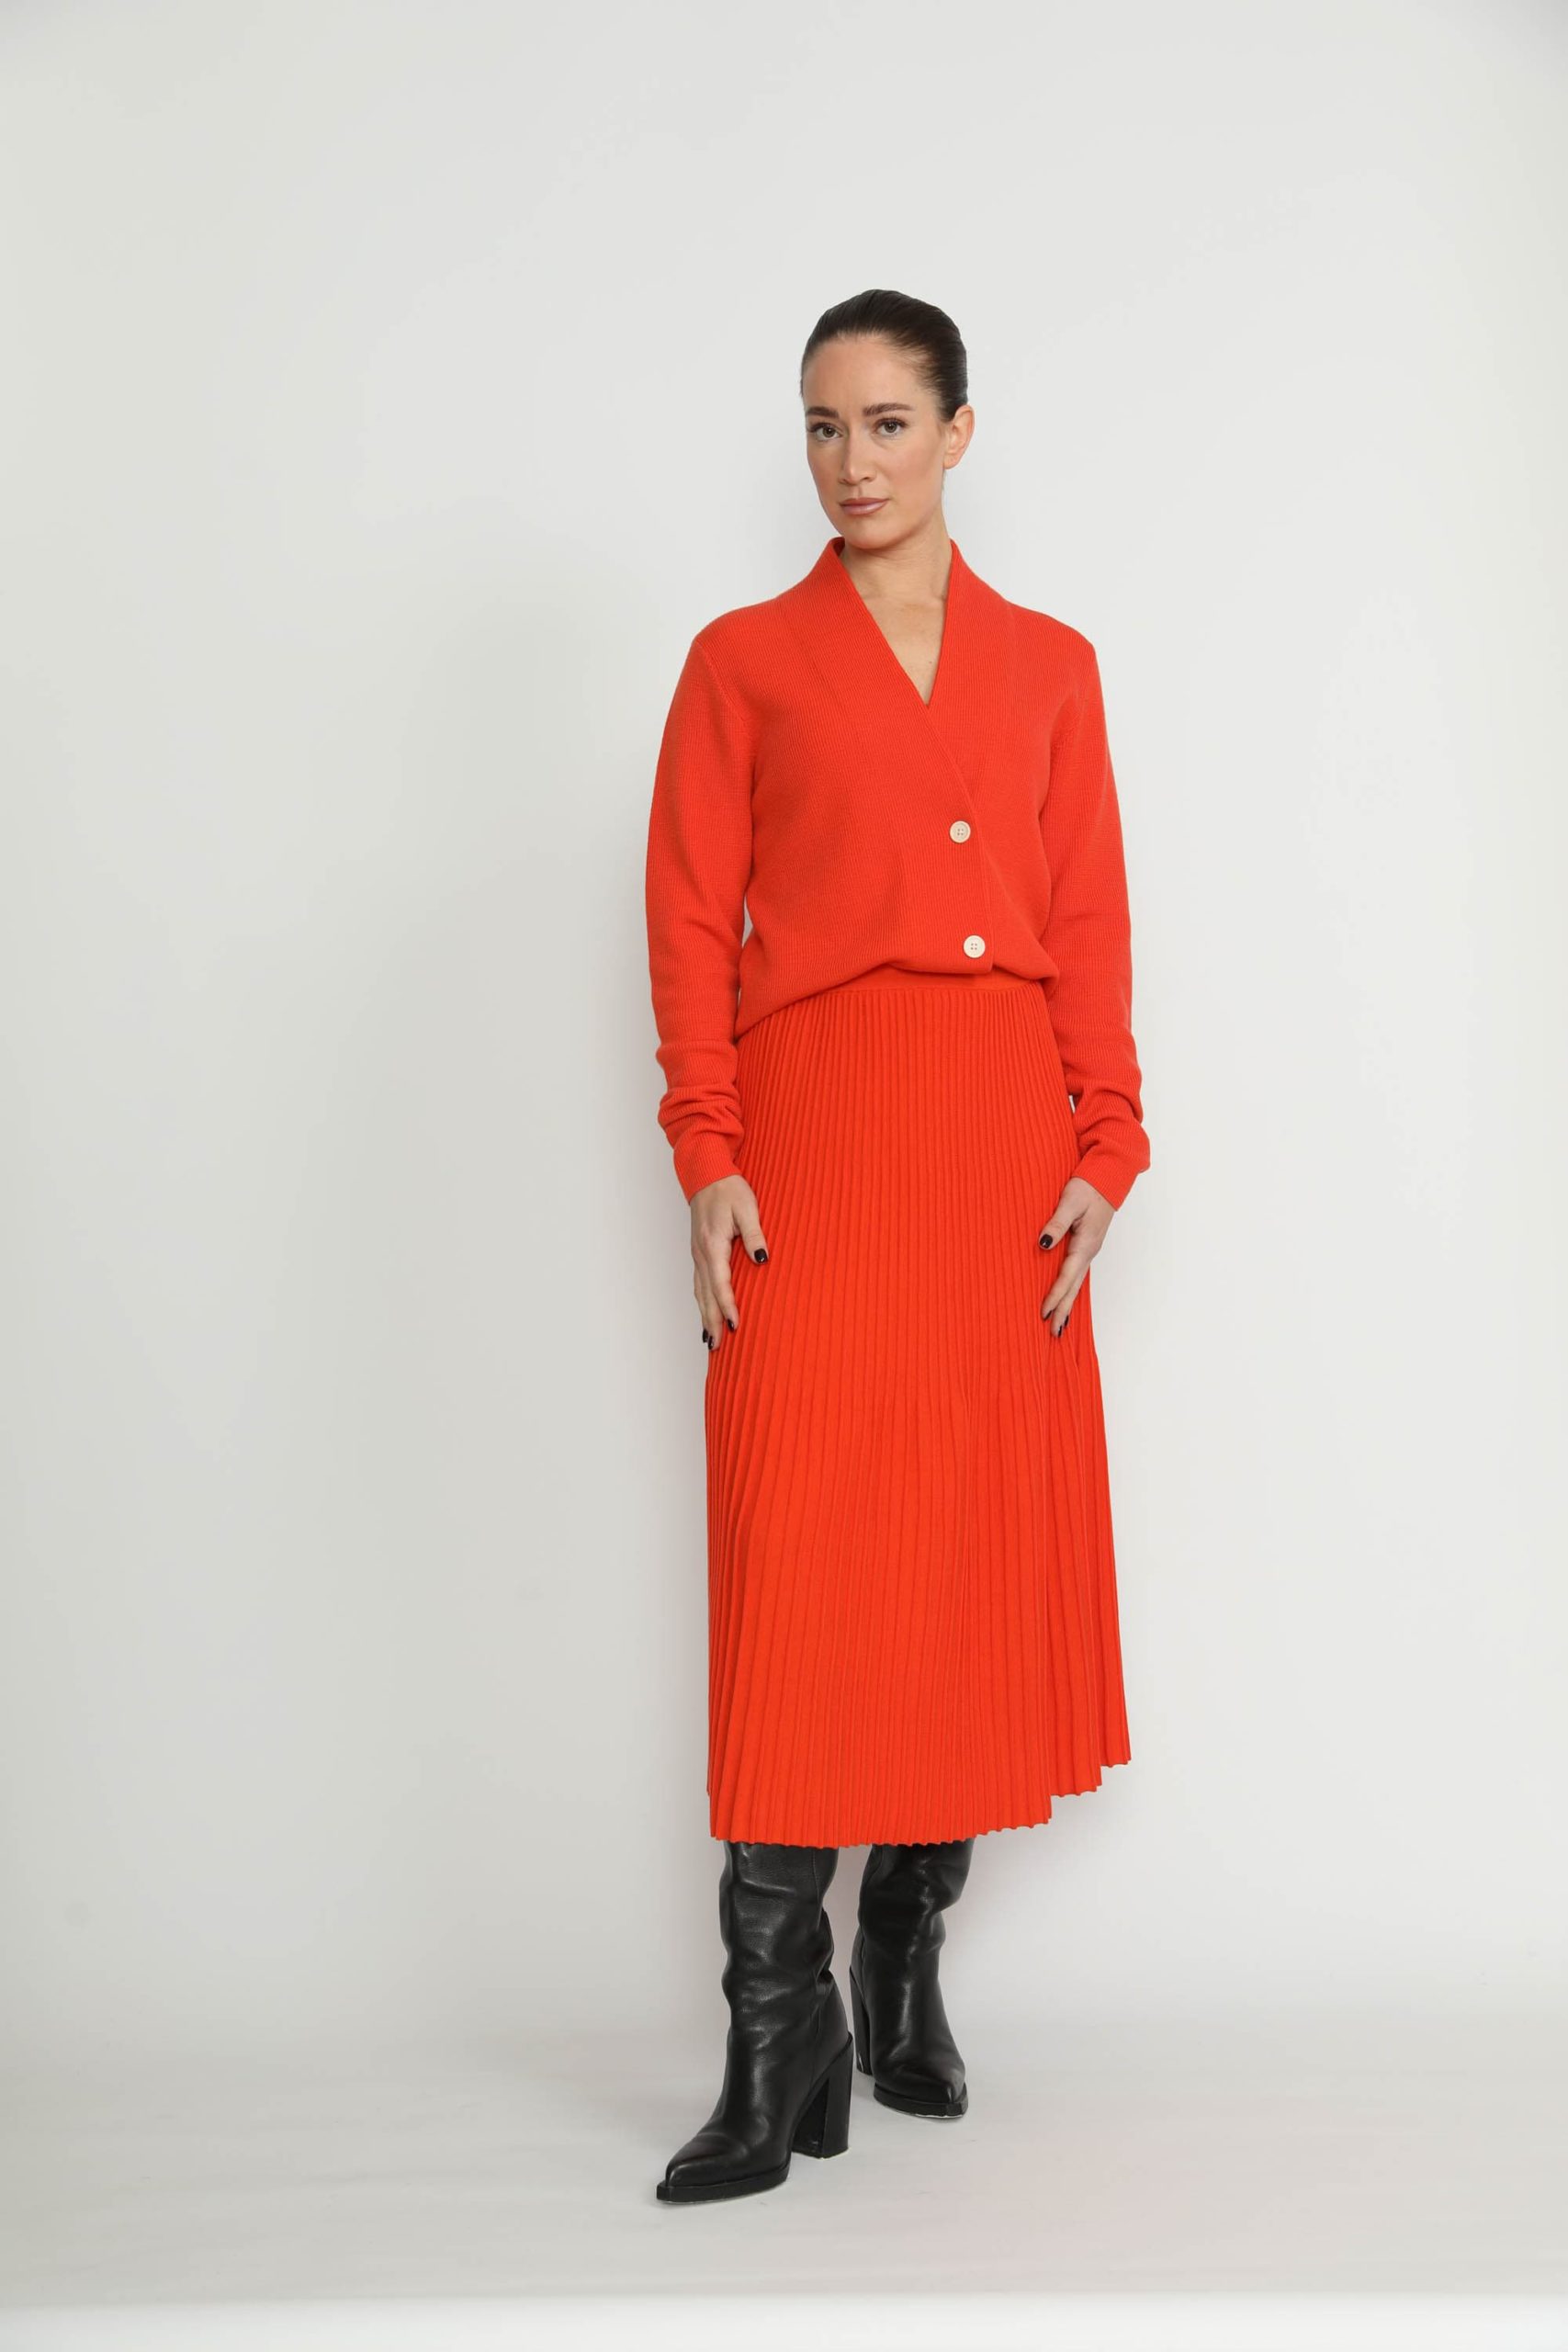 Appenzell Cardigan – Appenzell Merino Wool Orange Wrap Cardigan